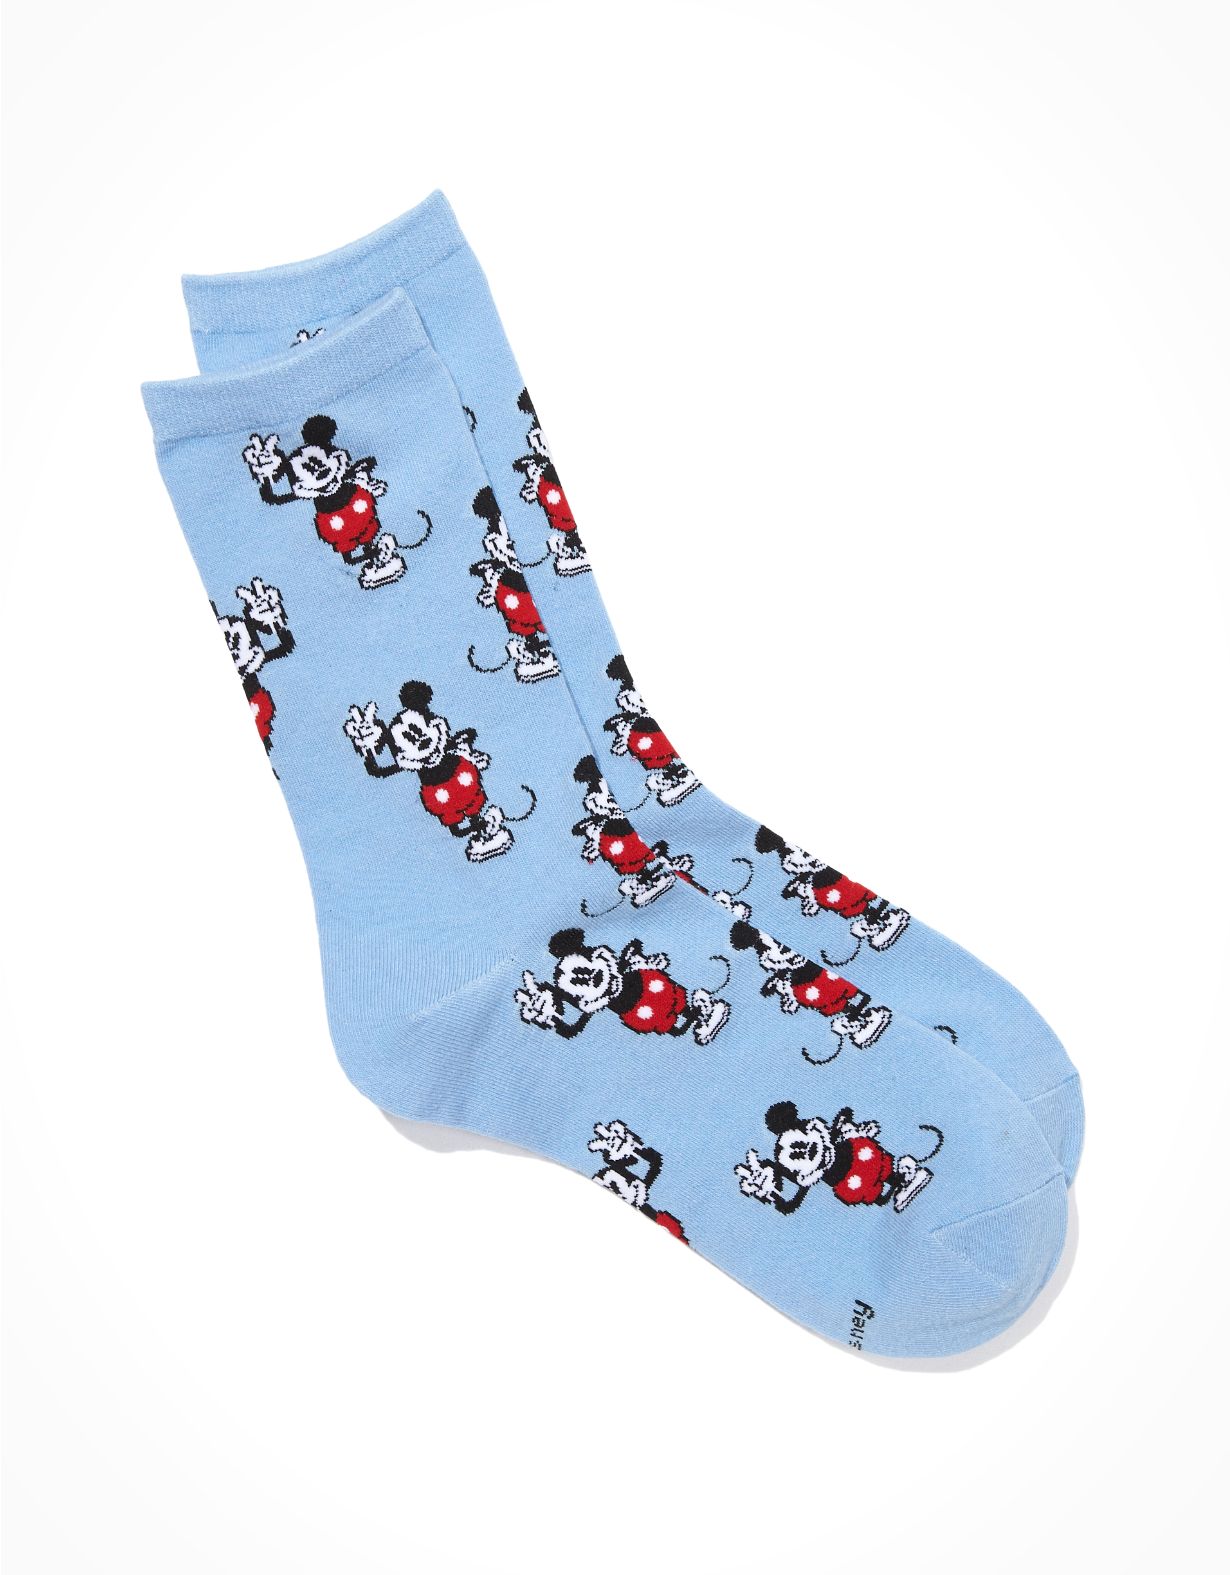 Disney X AE Mickey Crew Sock